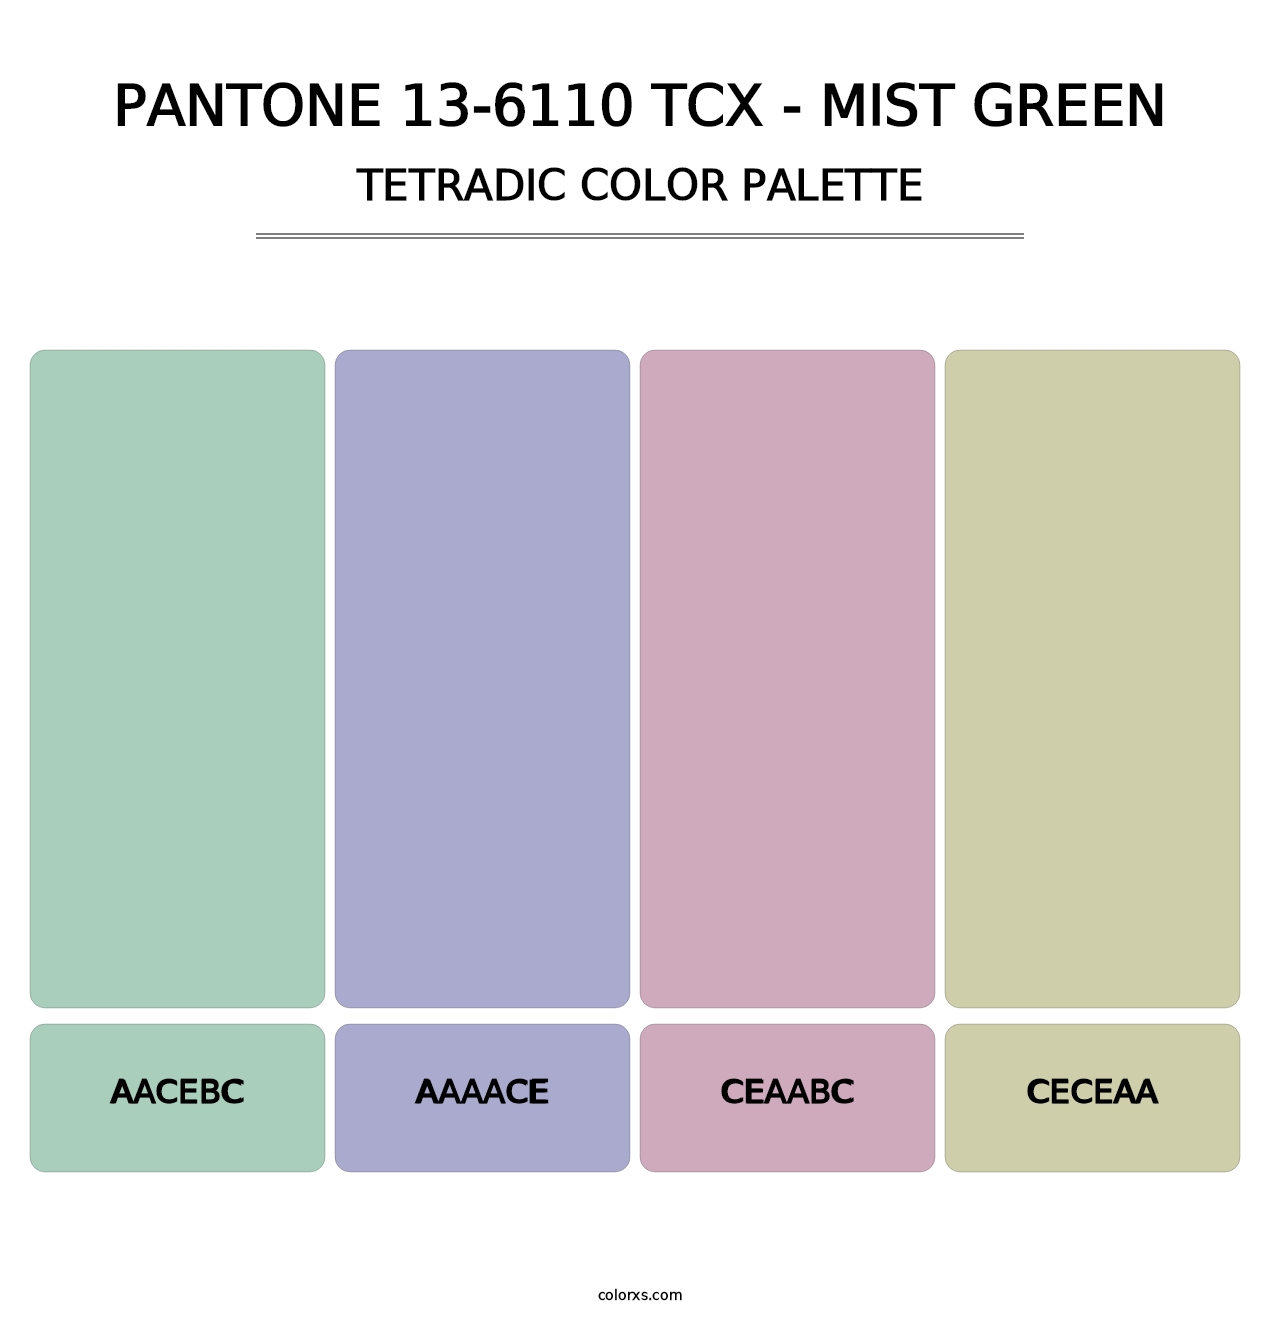 PANTONE 13-6110 TCX - Mist Green - Tetradic Color Palette